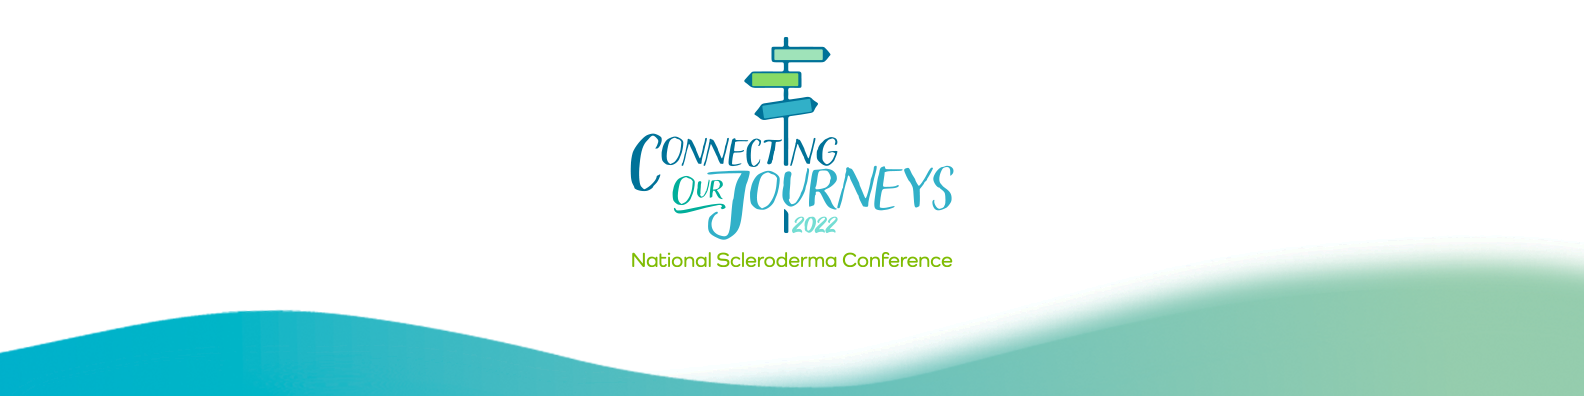 interior National Scleroderma Conference banner image